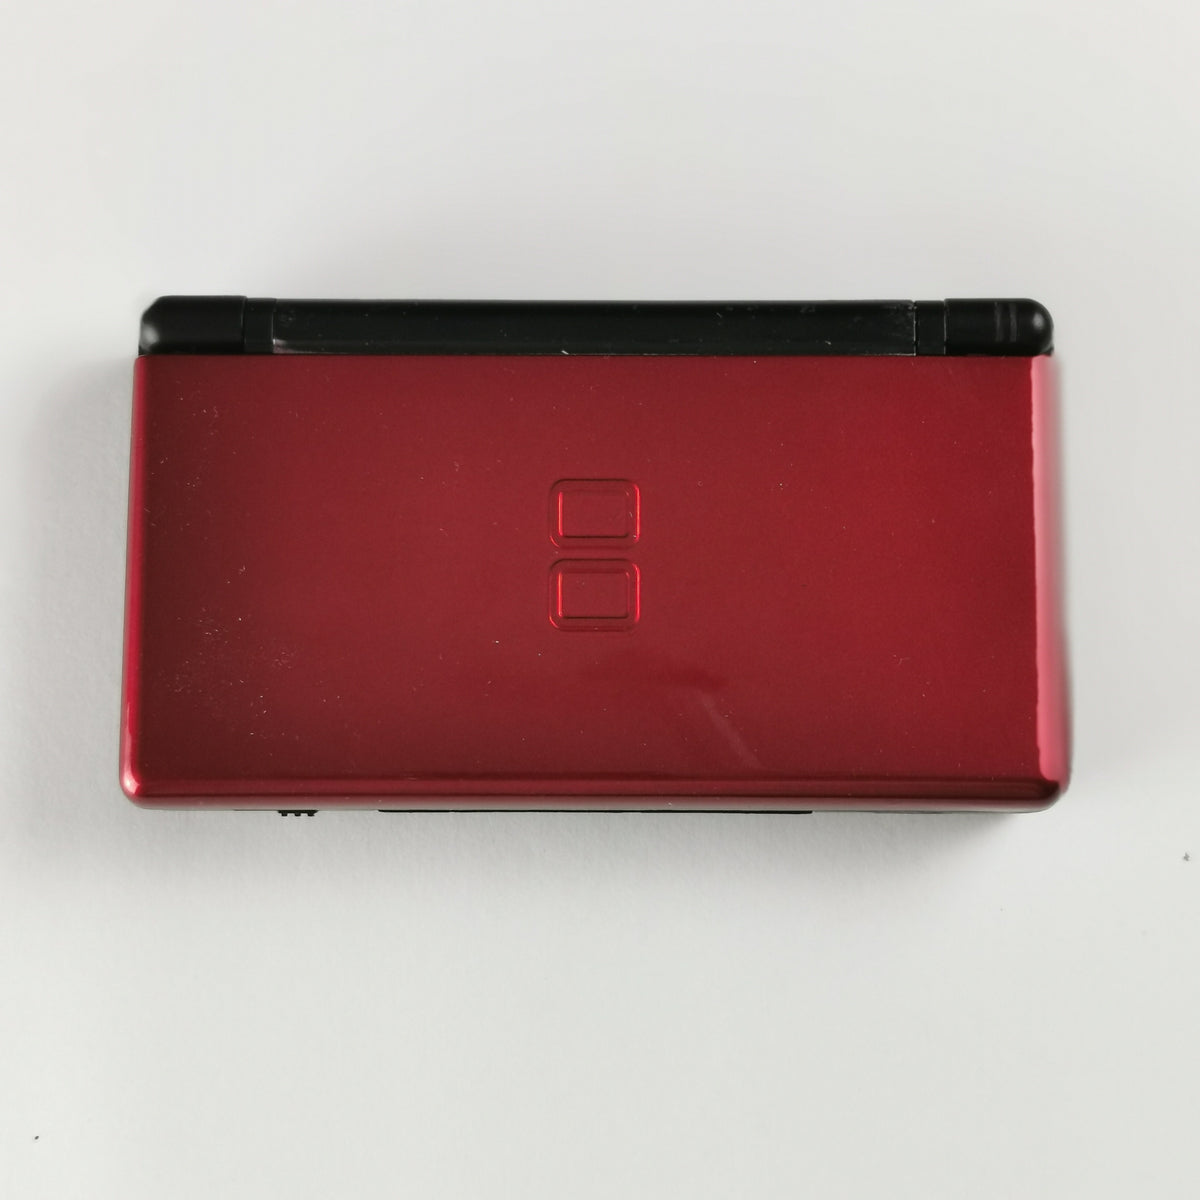 Nintendo DS Lite Crimson red/black [DS]